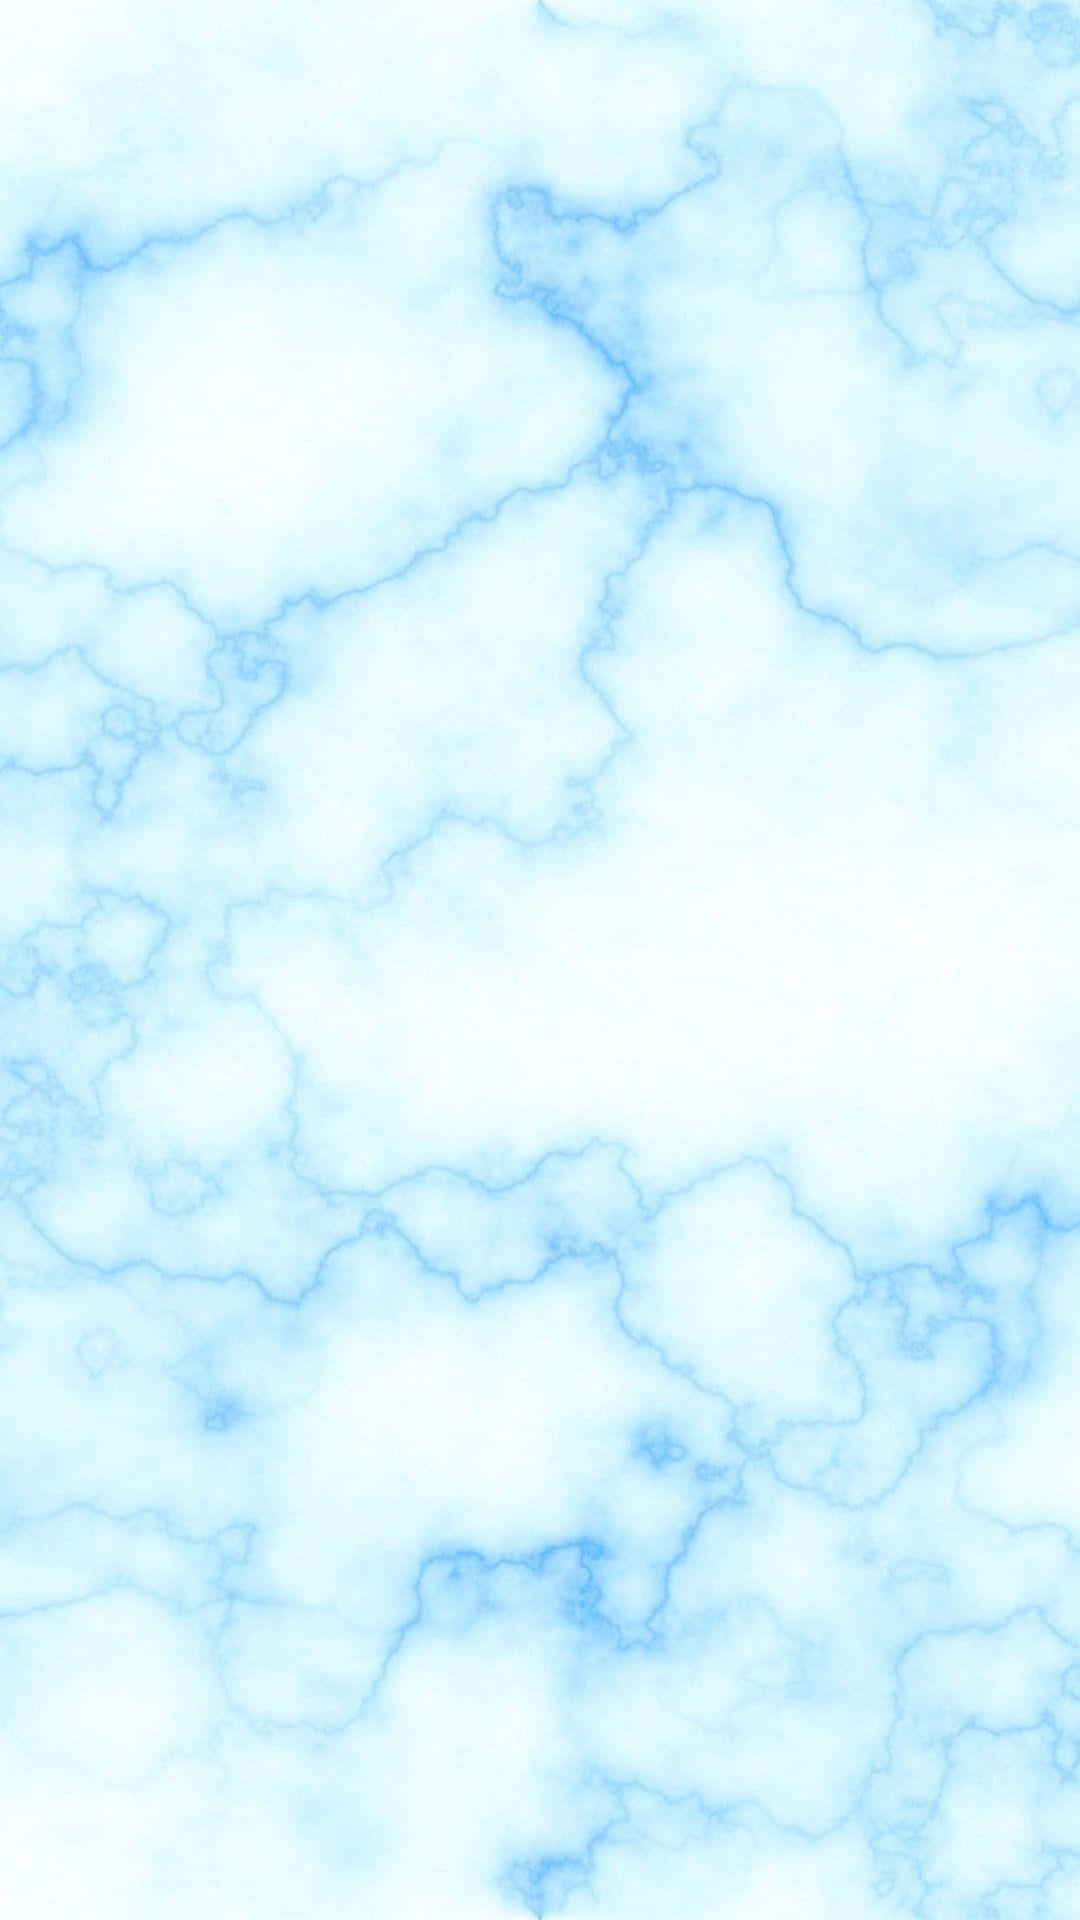 Cracks Texture Light Blue Marble Background